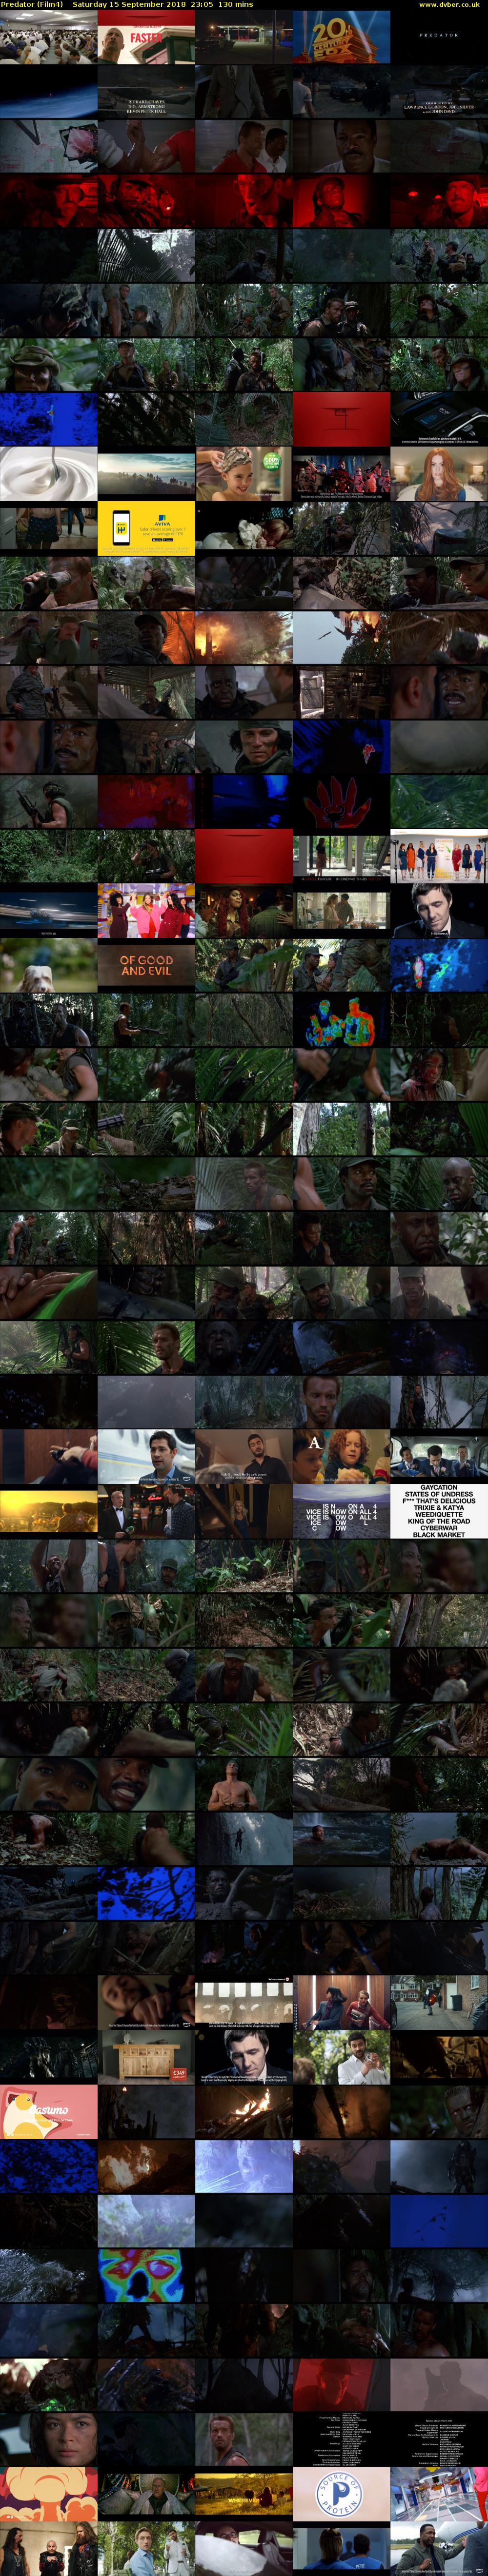 Predator (Film4) Saturday 15 September 2018 23:05 - 01:15